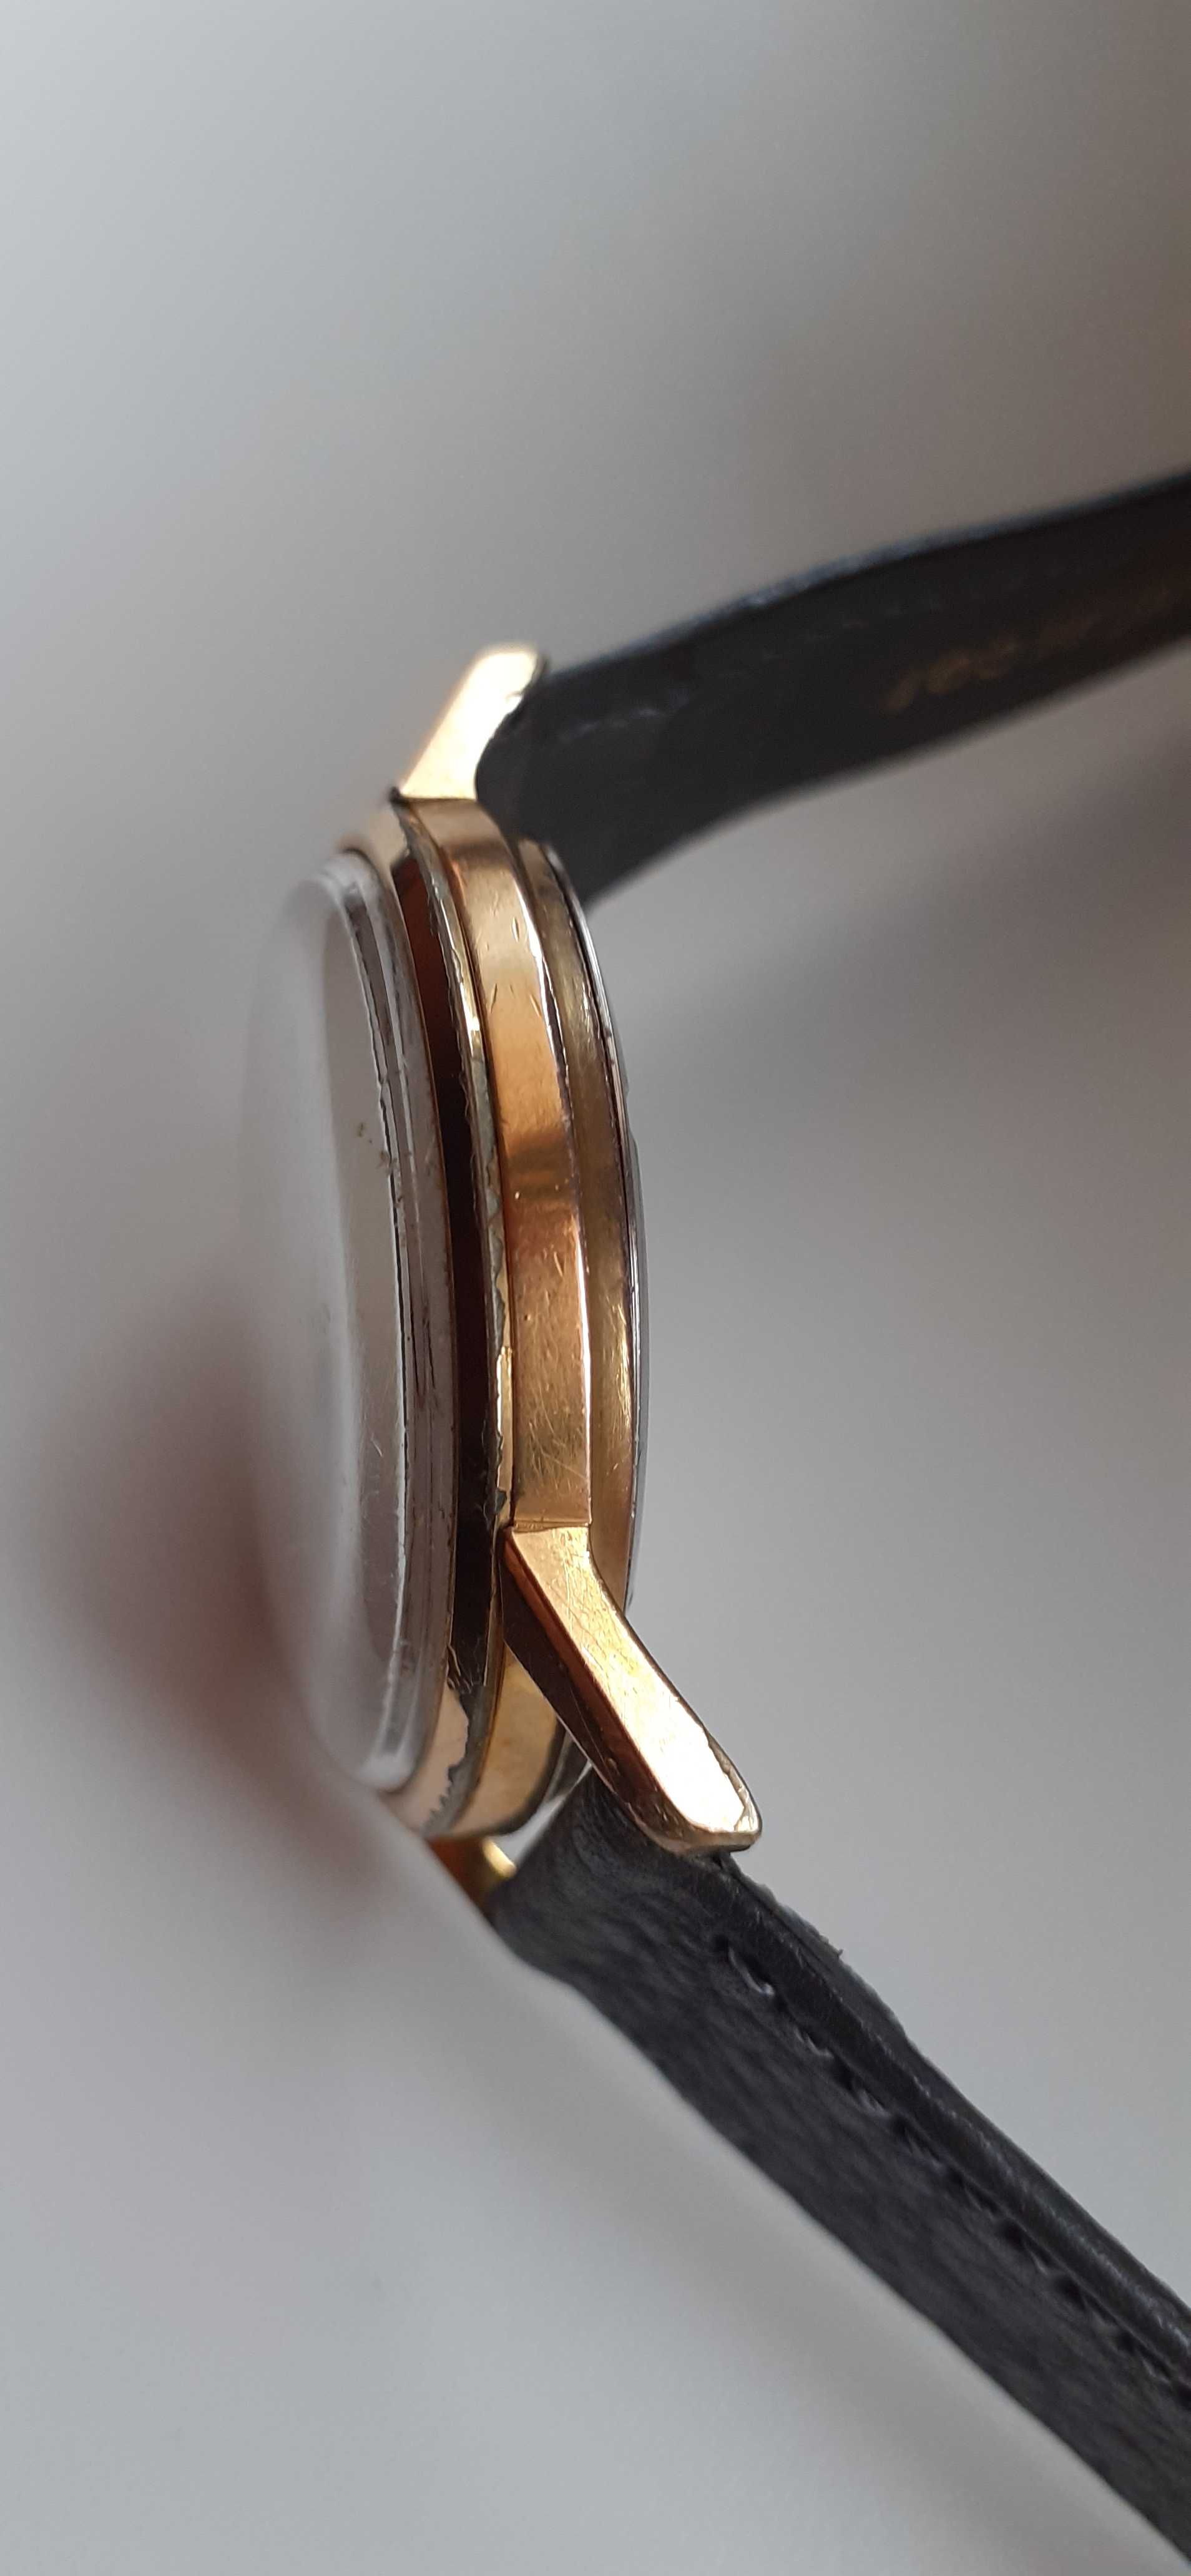 Zegarek Dugena Super 1000 A automatic 25 jewels pozłacana.